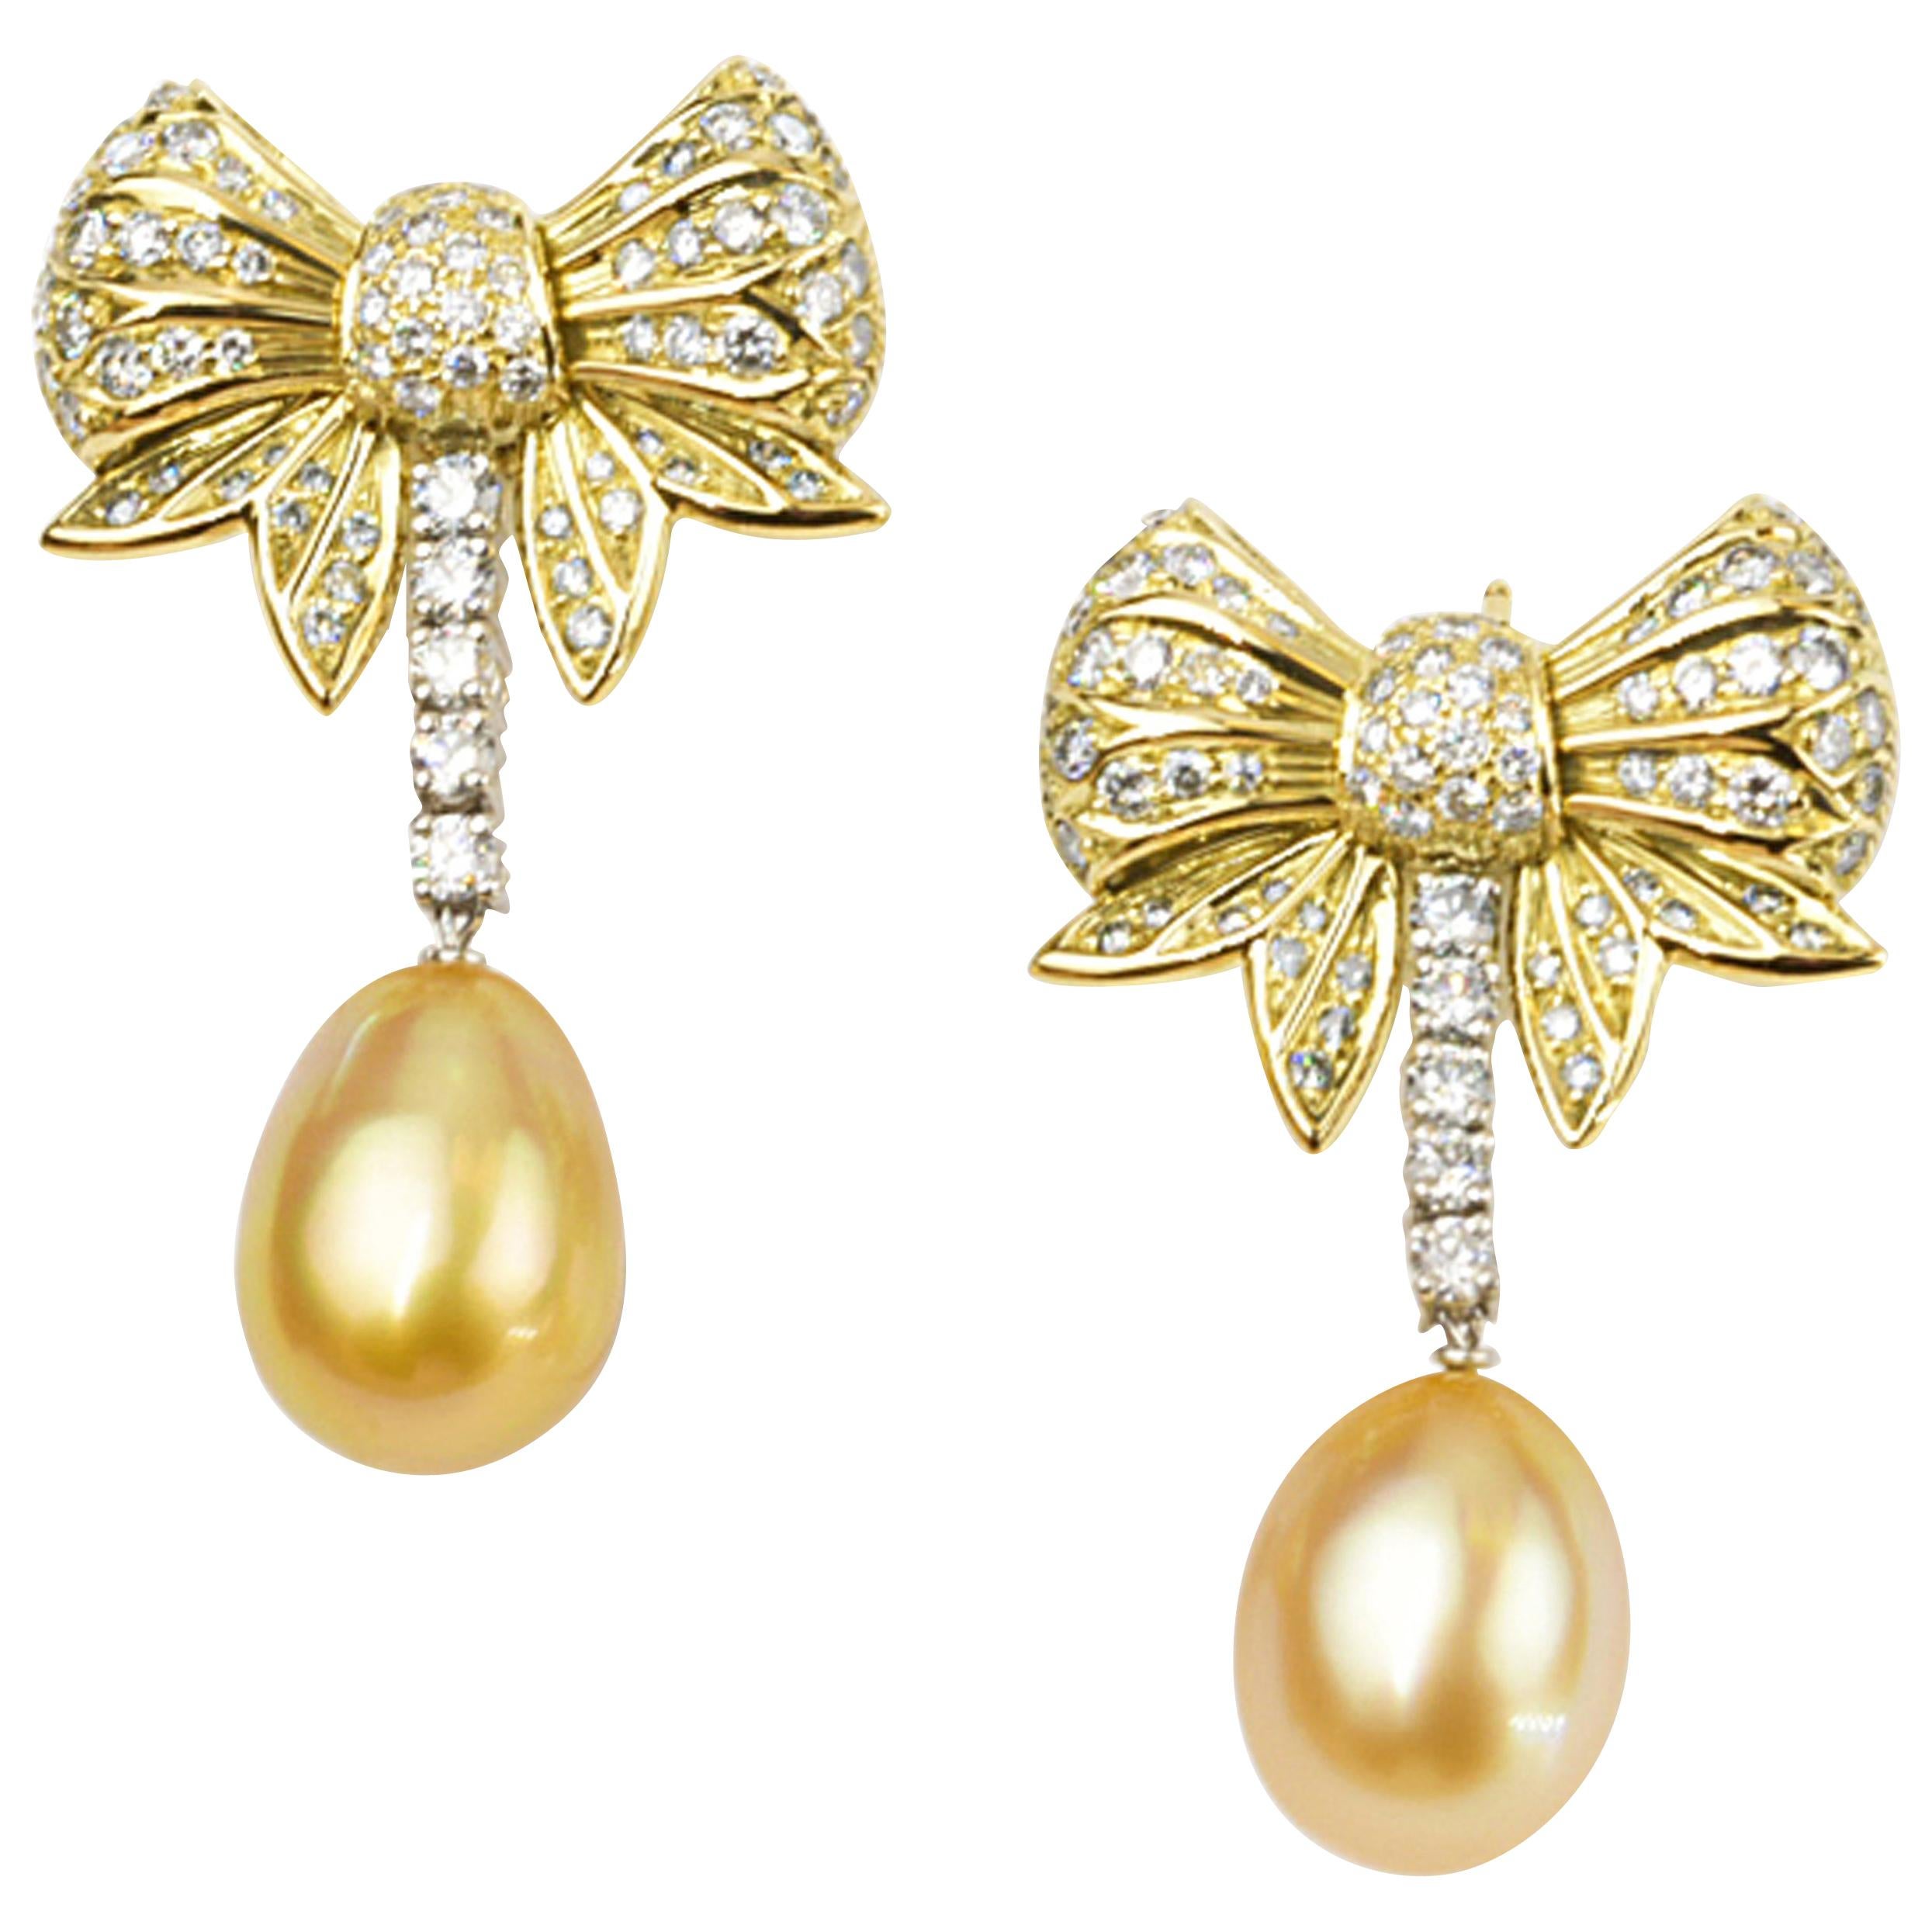 Matthew Cambery 18 Karat Gold Platinum Diamond Bow Earrings South Sea Pearls